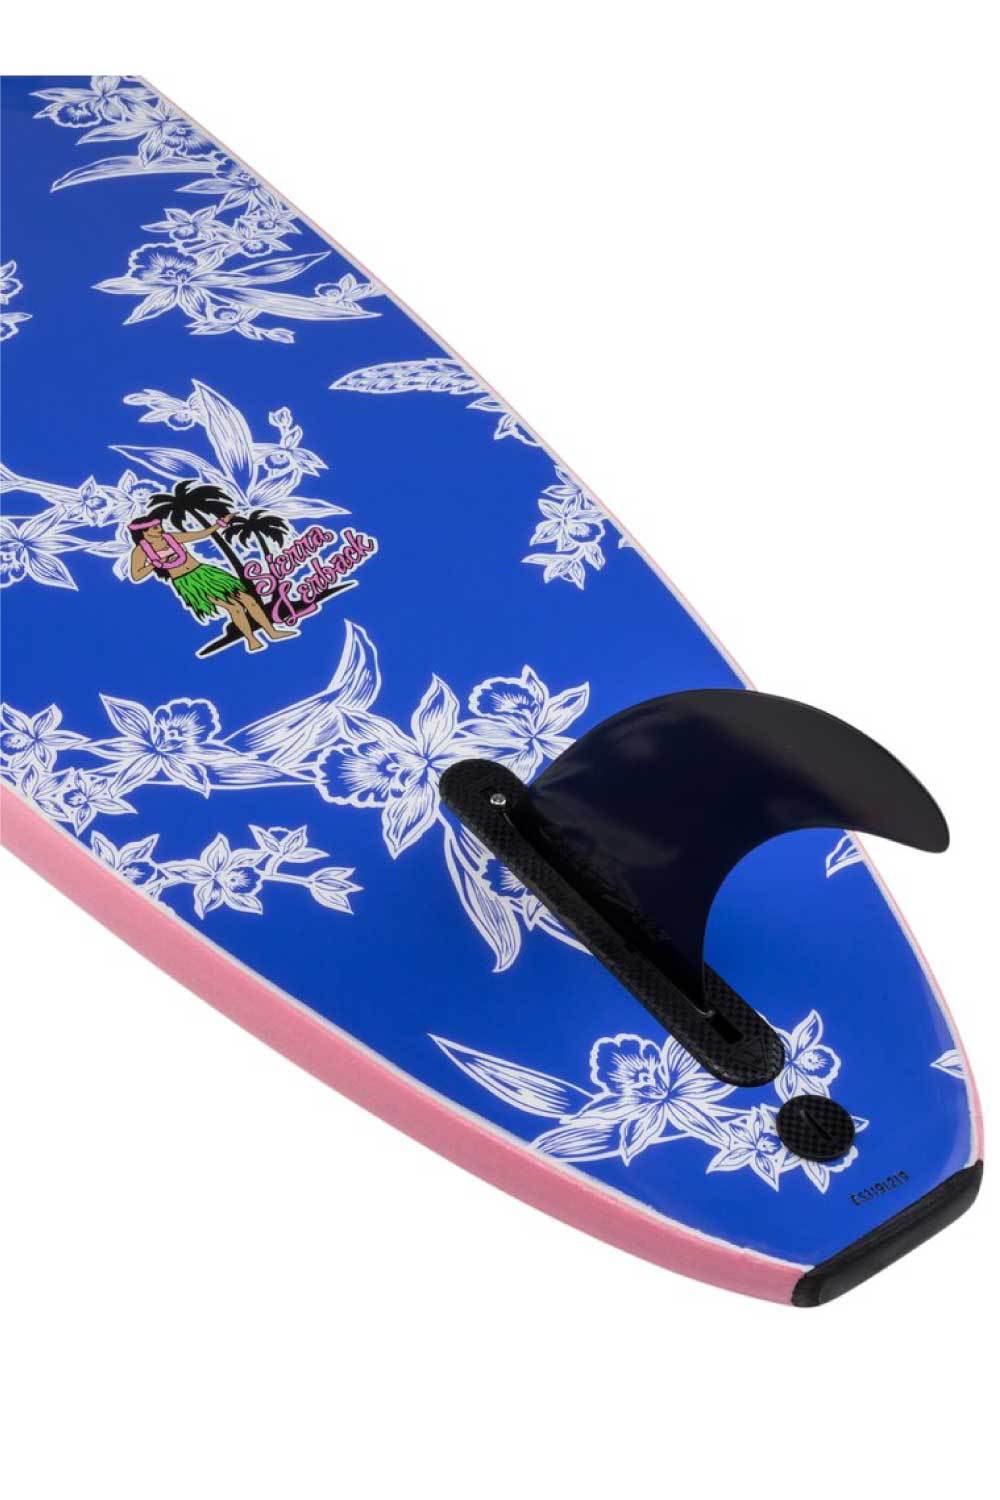 Catch Surf Sierra Lerback Odysea Plank Softboard